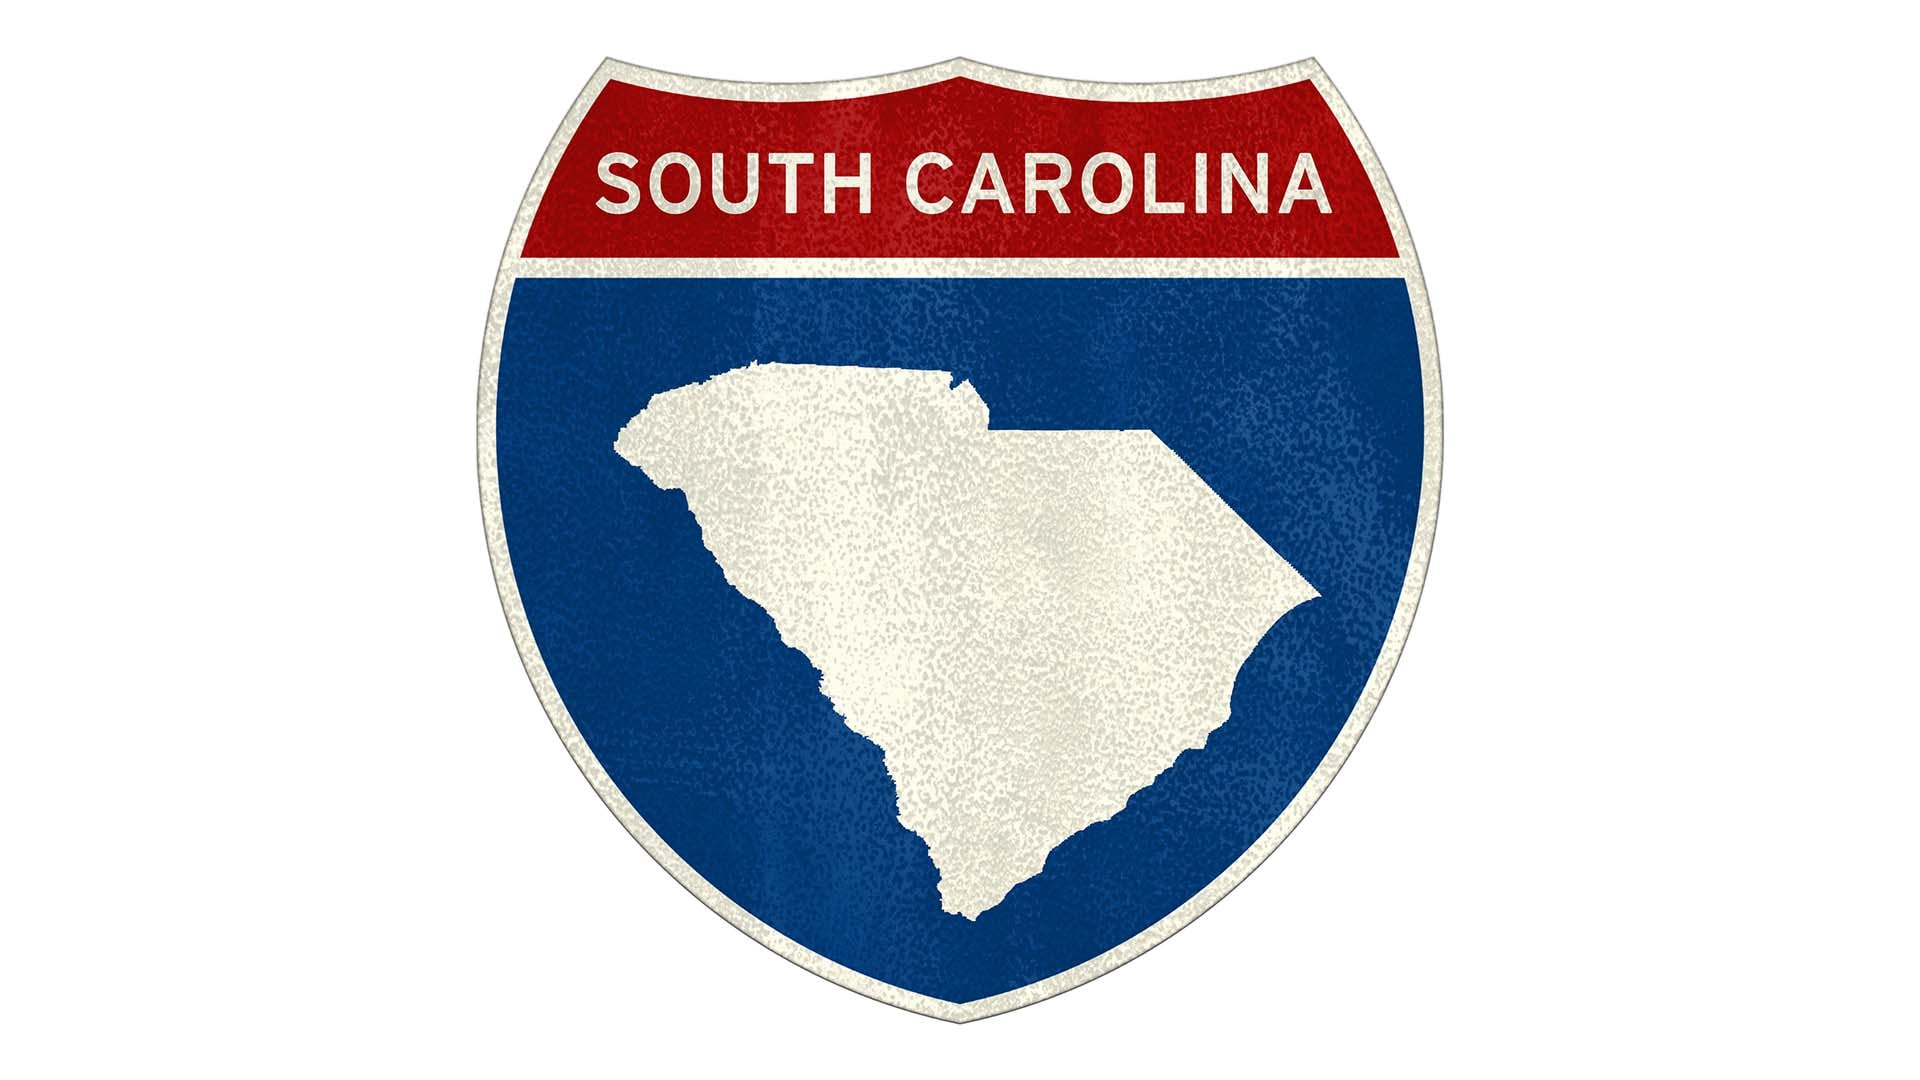 South Carolina state roadside sign